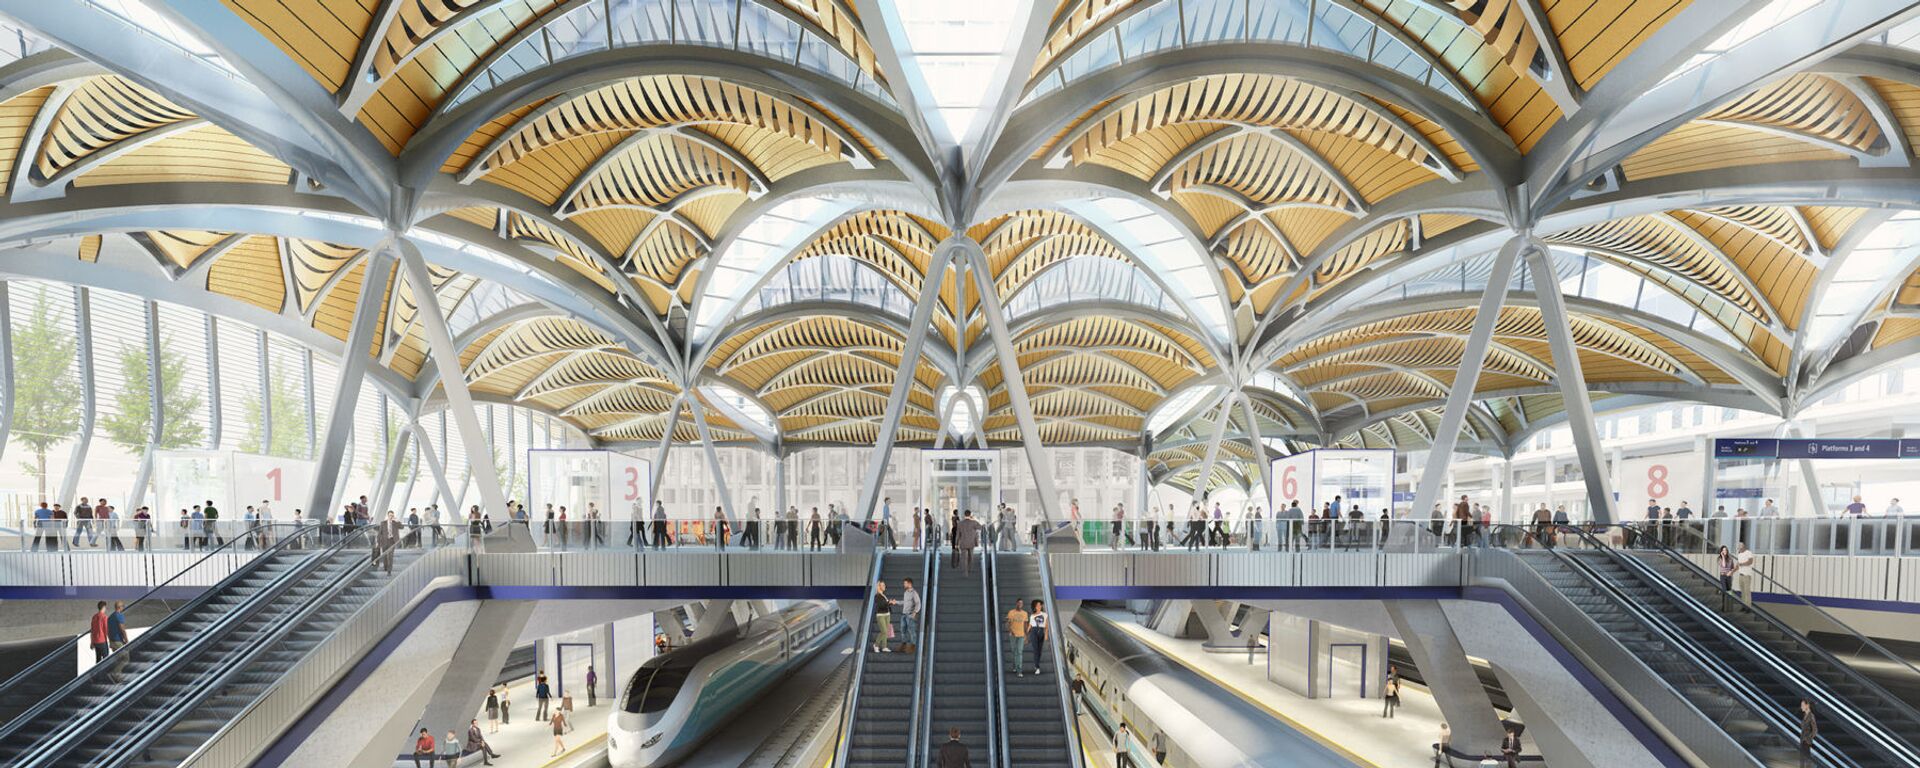 An artist's impression of the new HS2 terminal at London's Euston station - Sputnik International, 1920, 22.02.2021